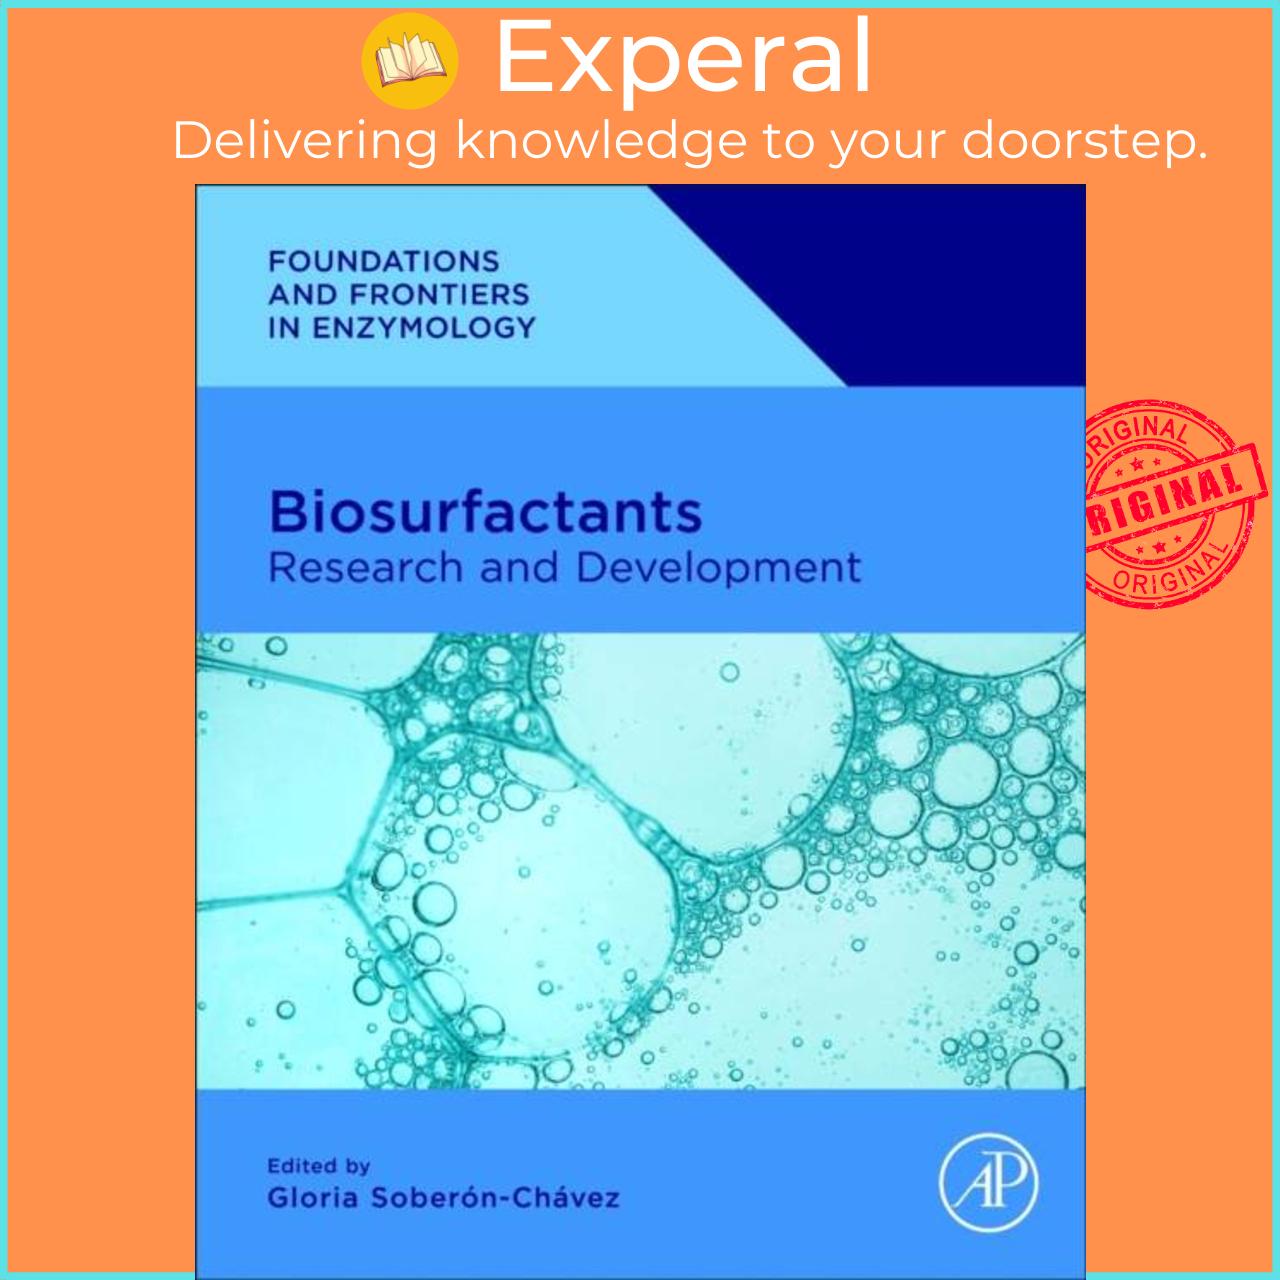 Sách - Biosurfactants - Research and Development by Gloria Soberon-Chavez (UK edition, paperback)